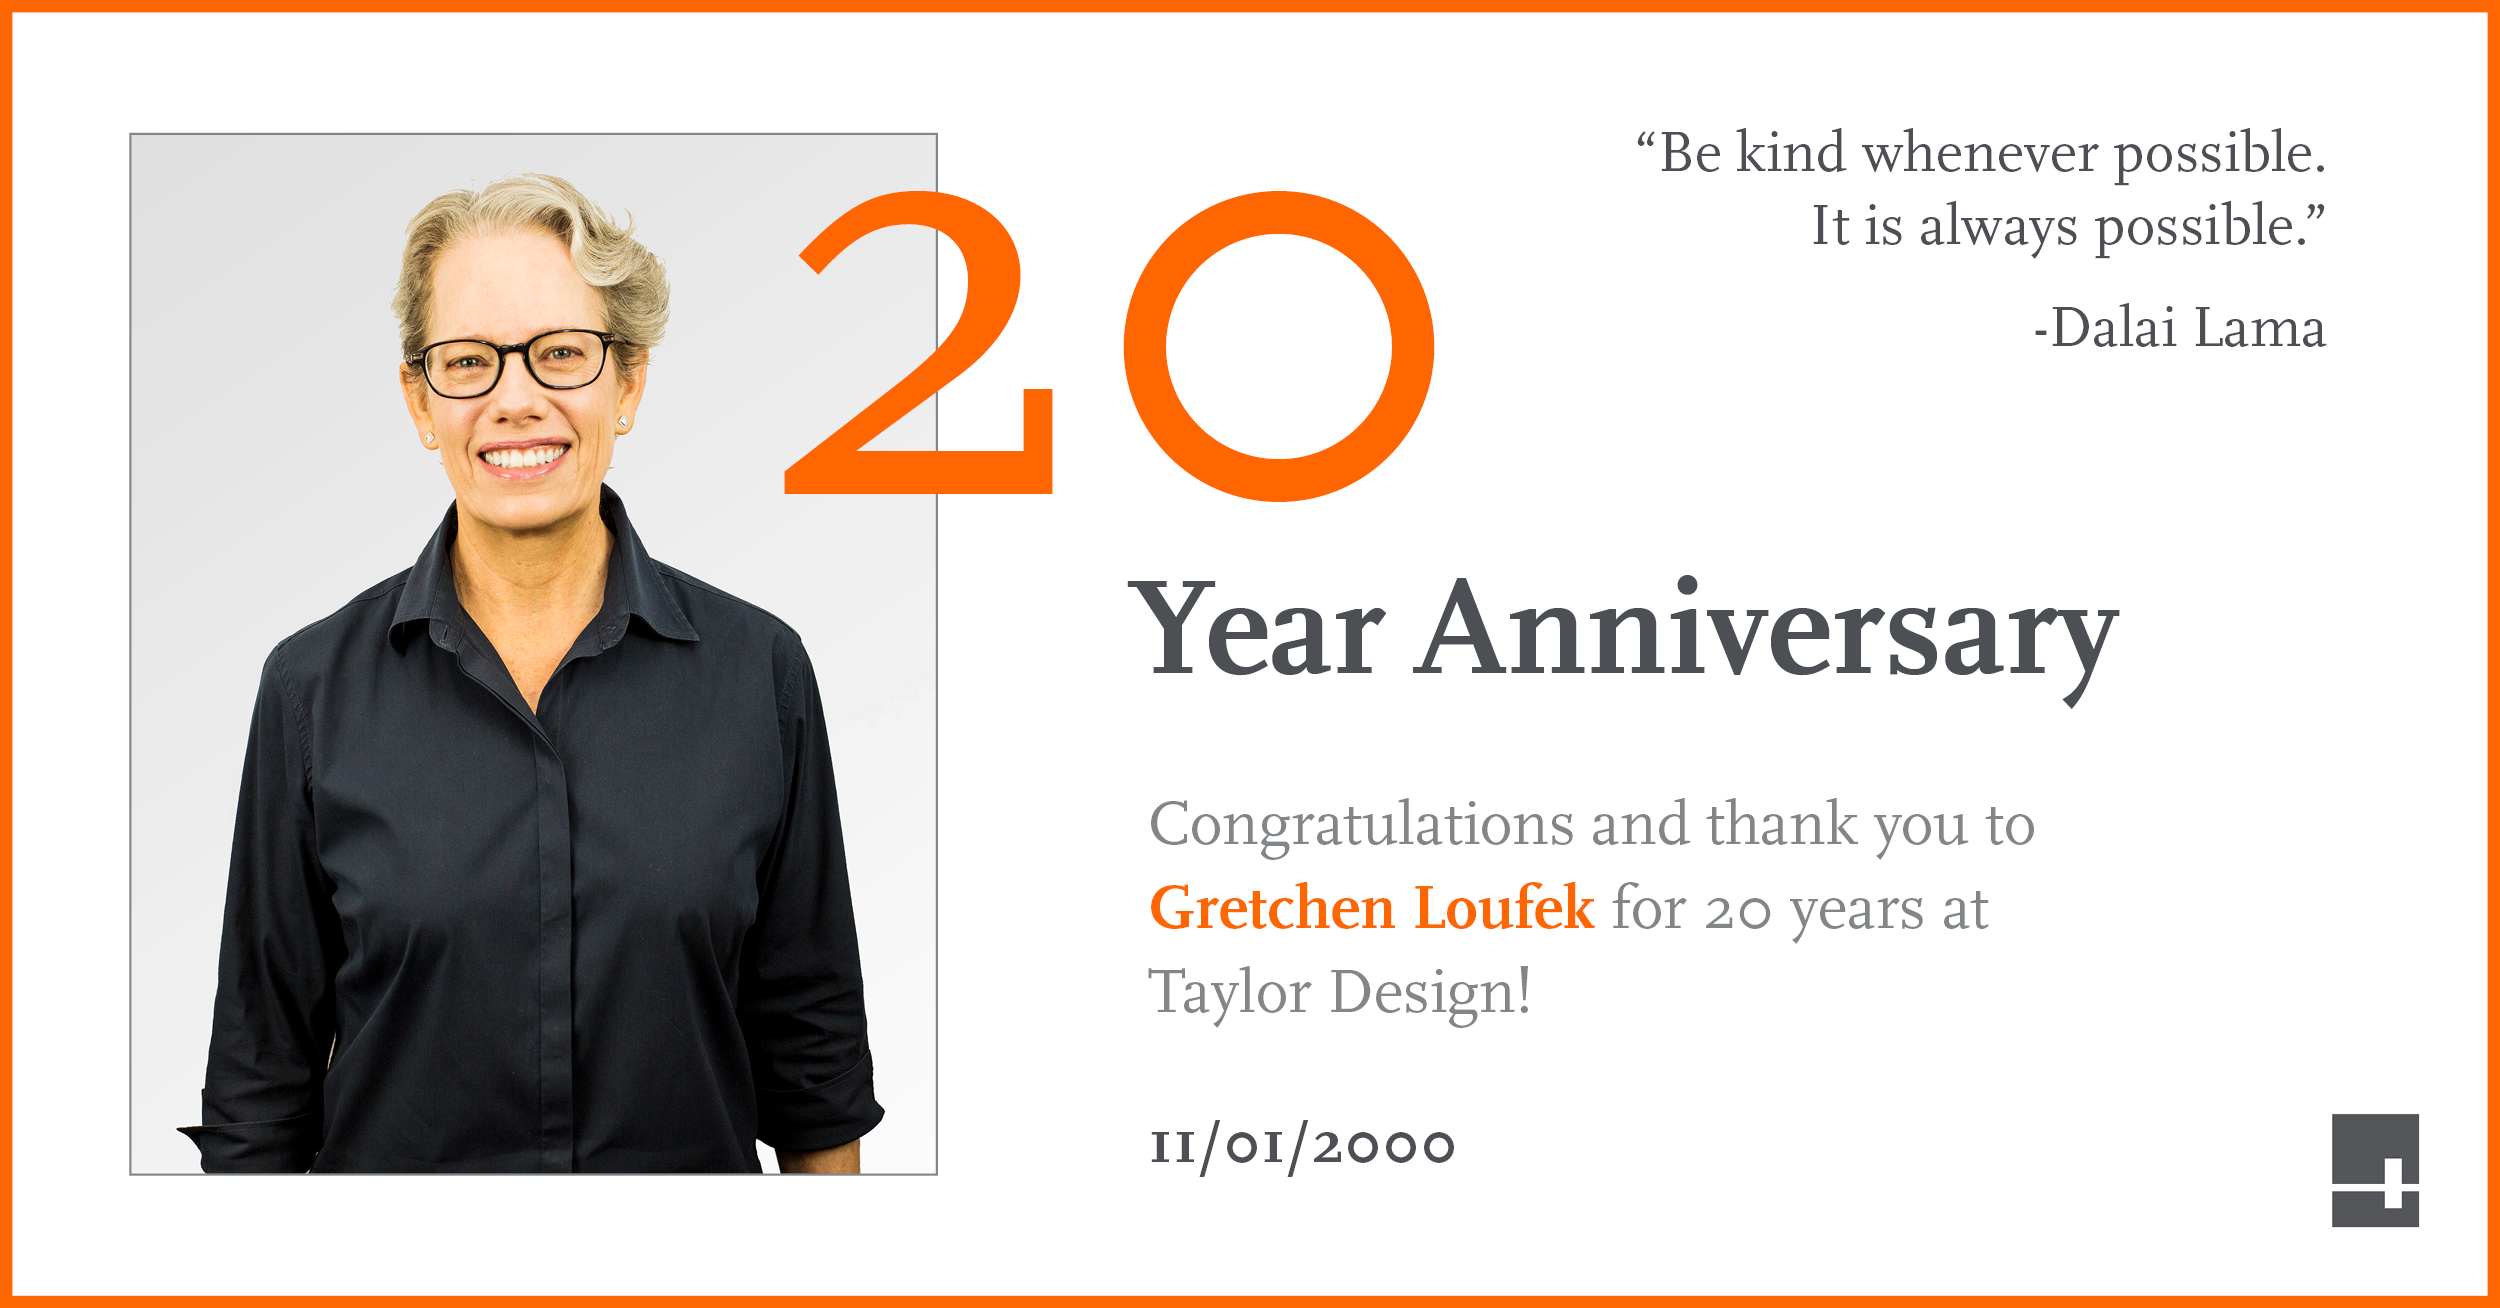 Gretchen Loufek celebrating 20 years at Taylor Design